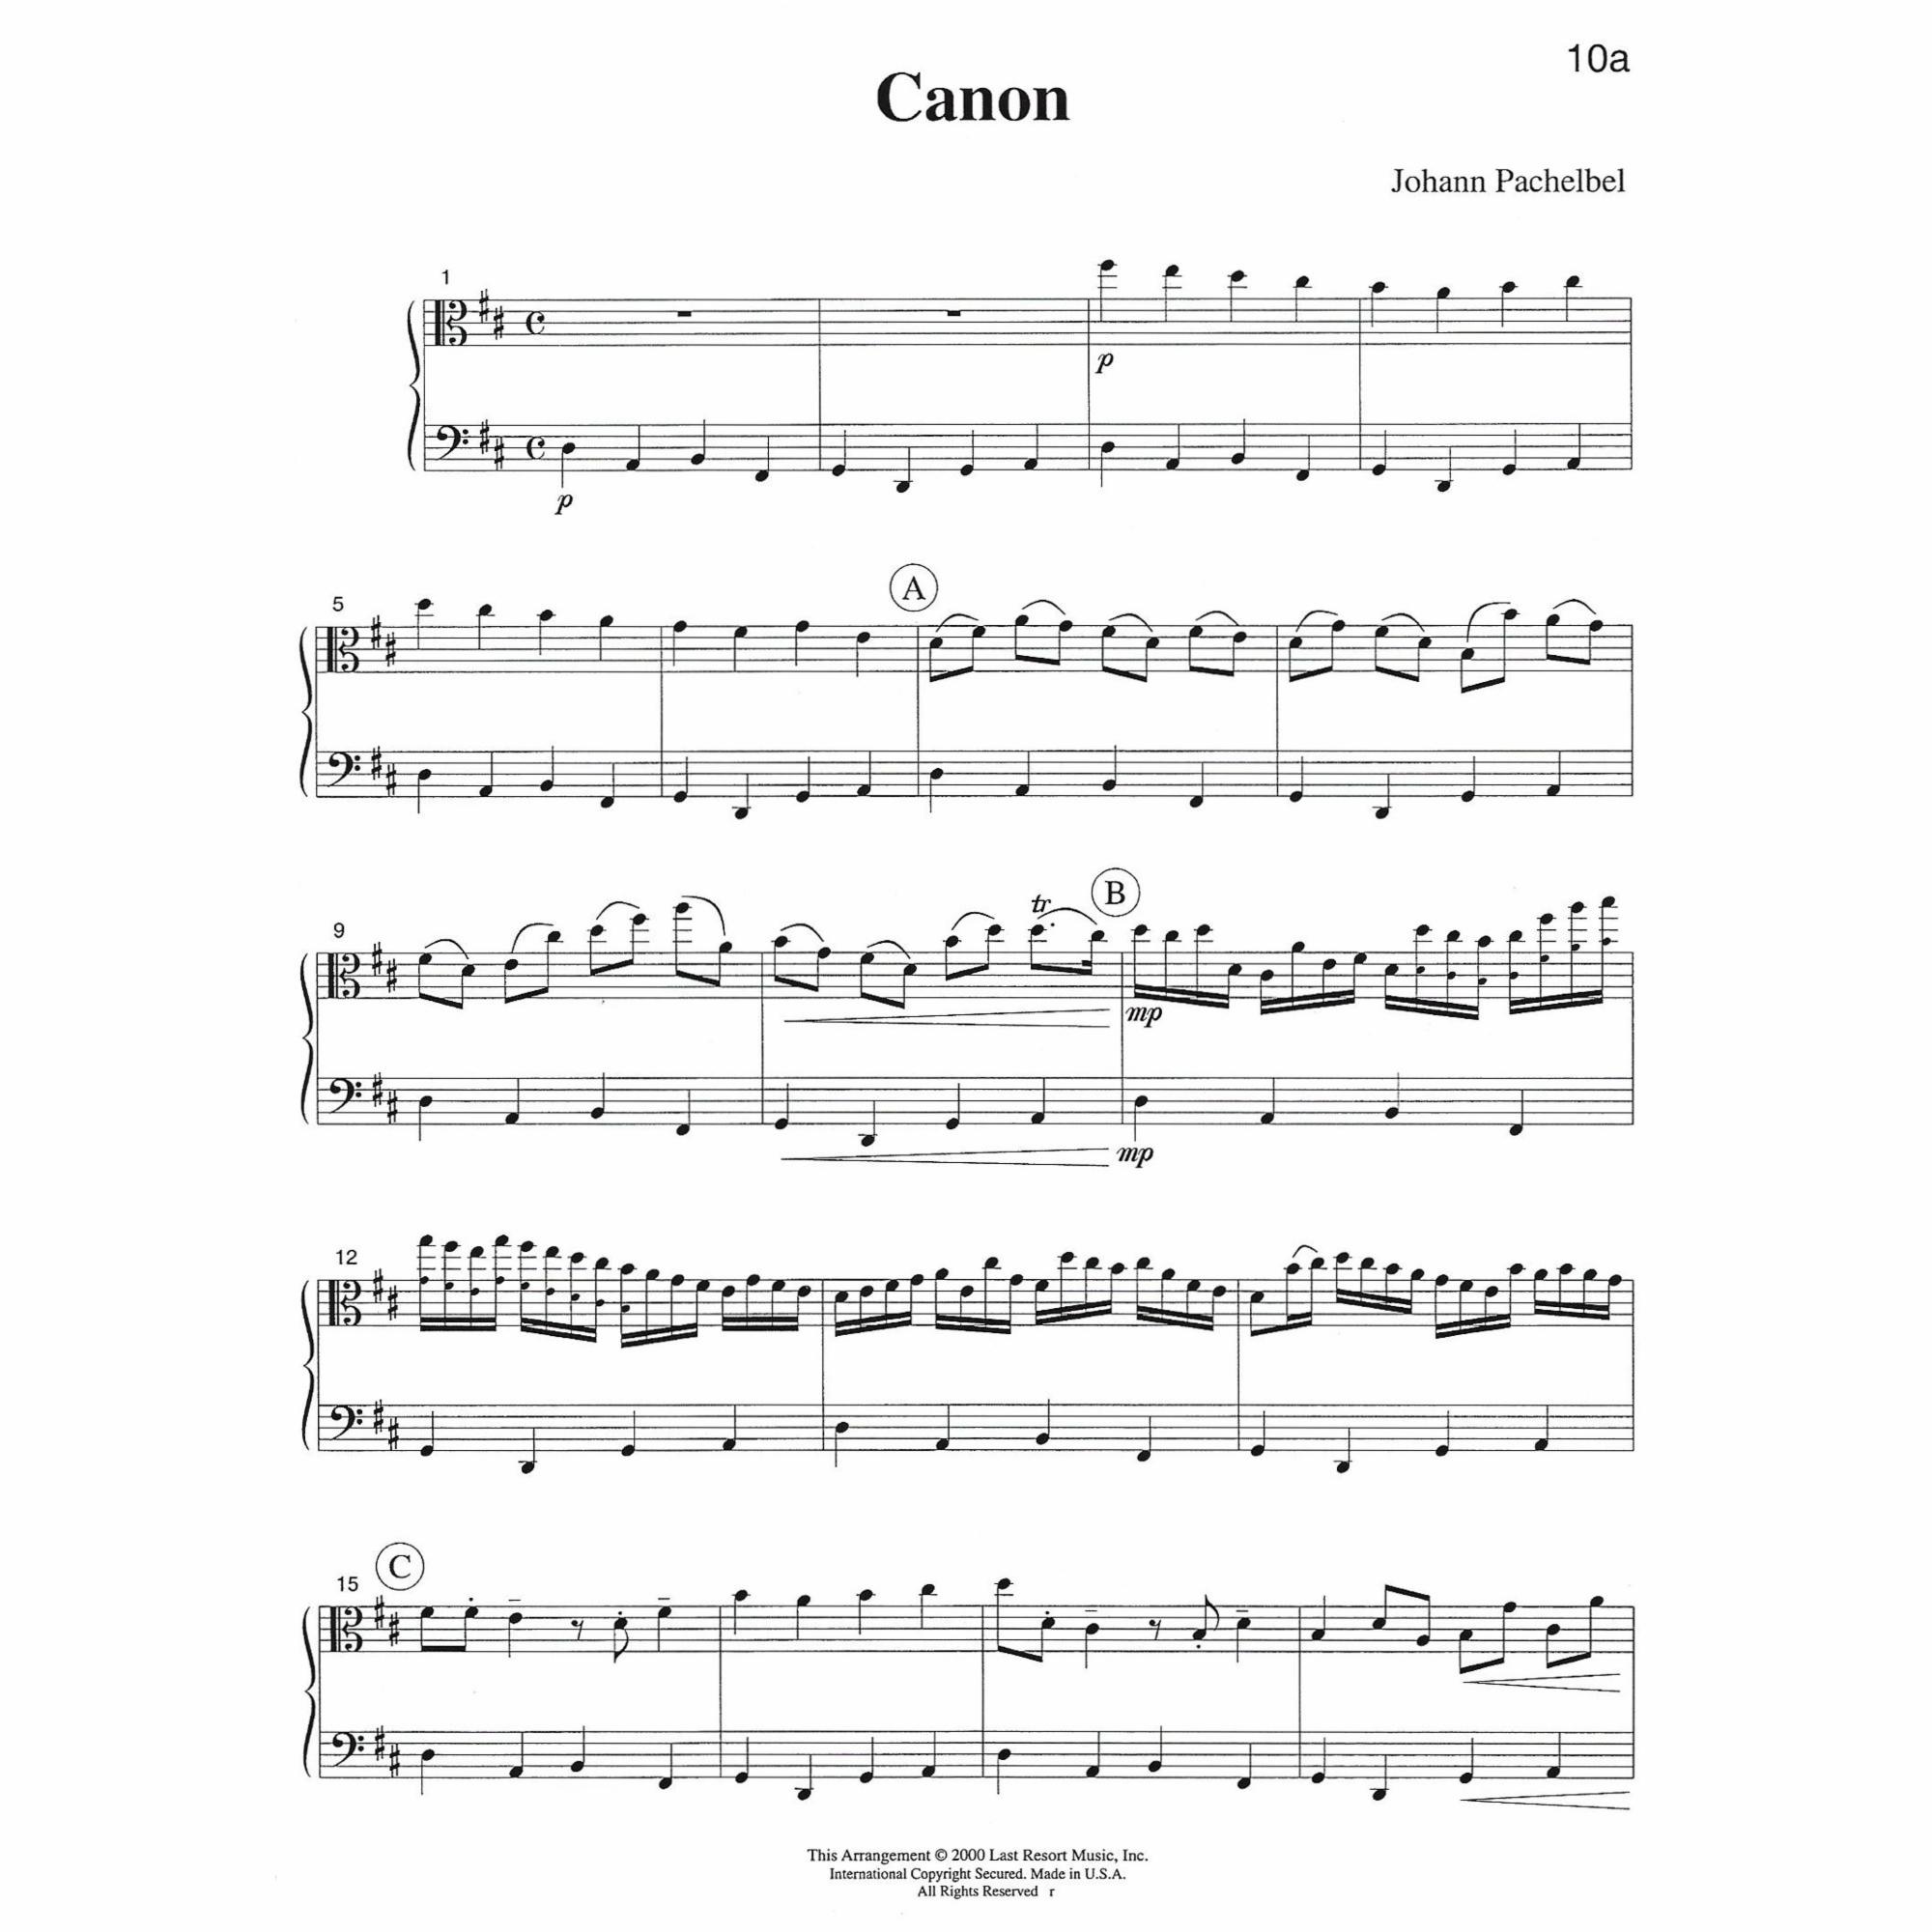 Sample: Viola and Cello (Pg. 10a)